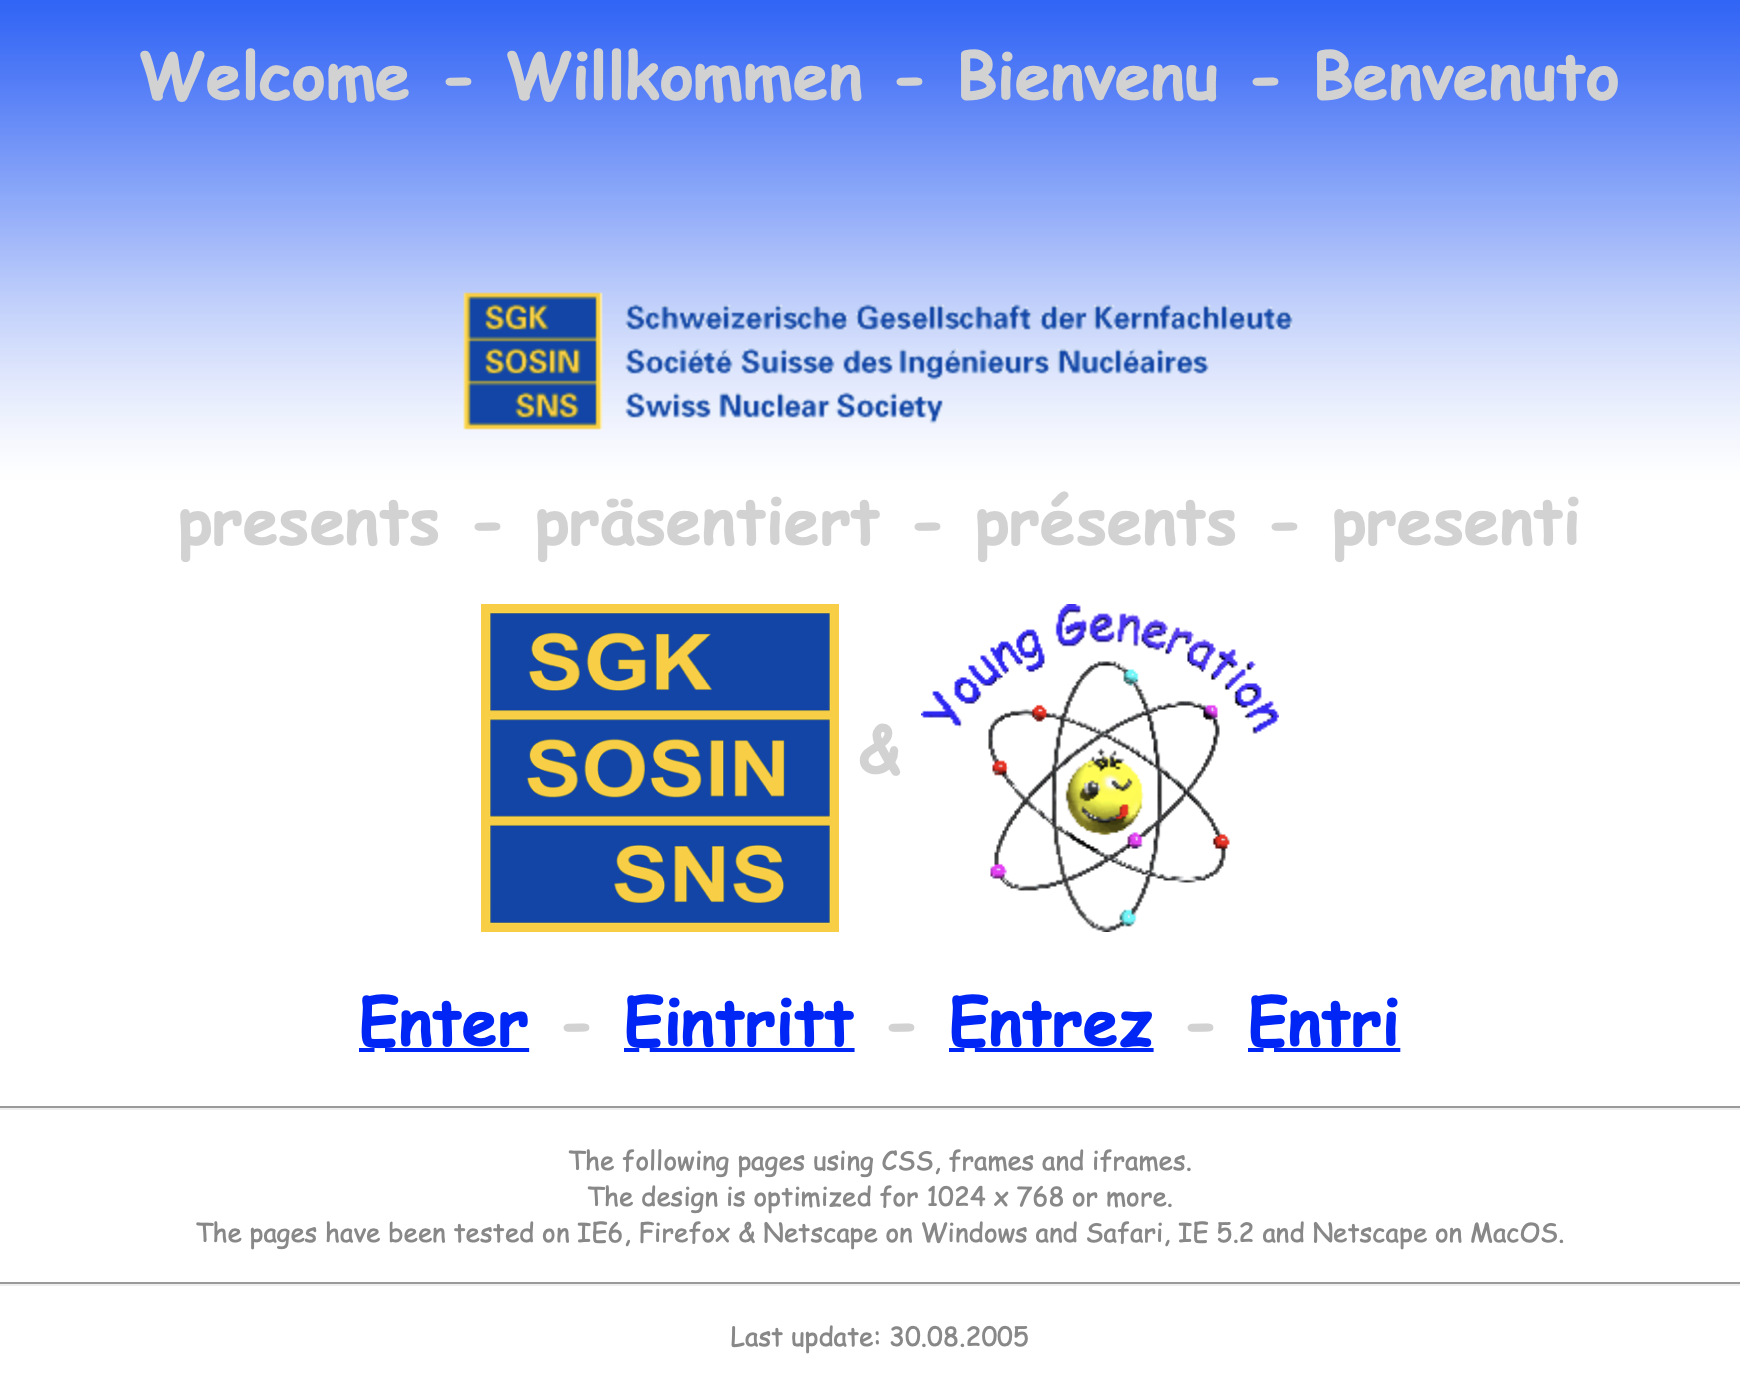 Design Kernfachleute.ch 2005 - 2014